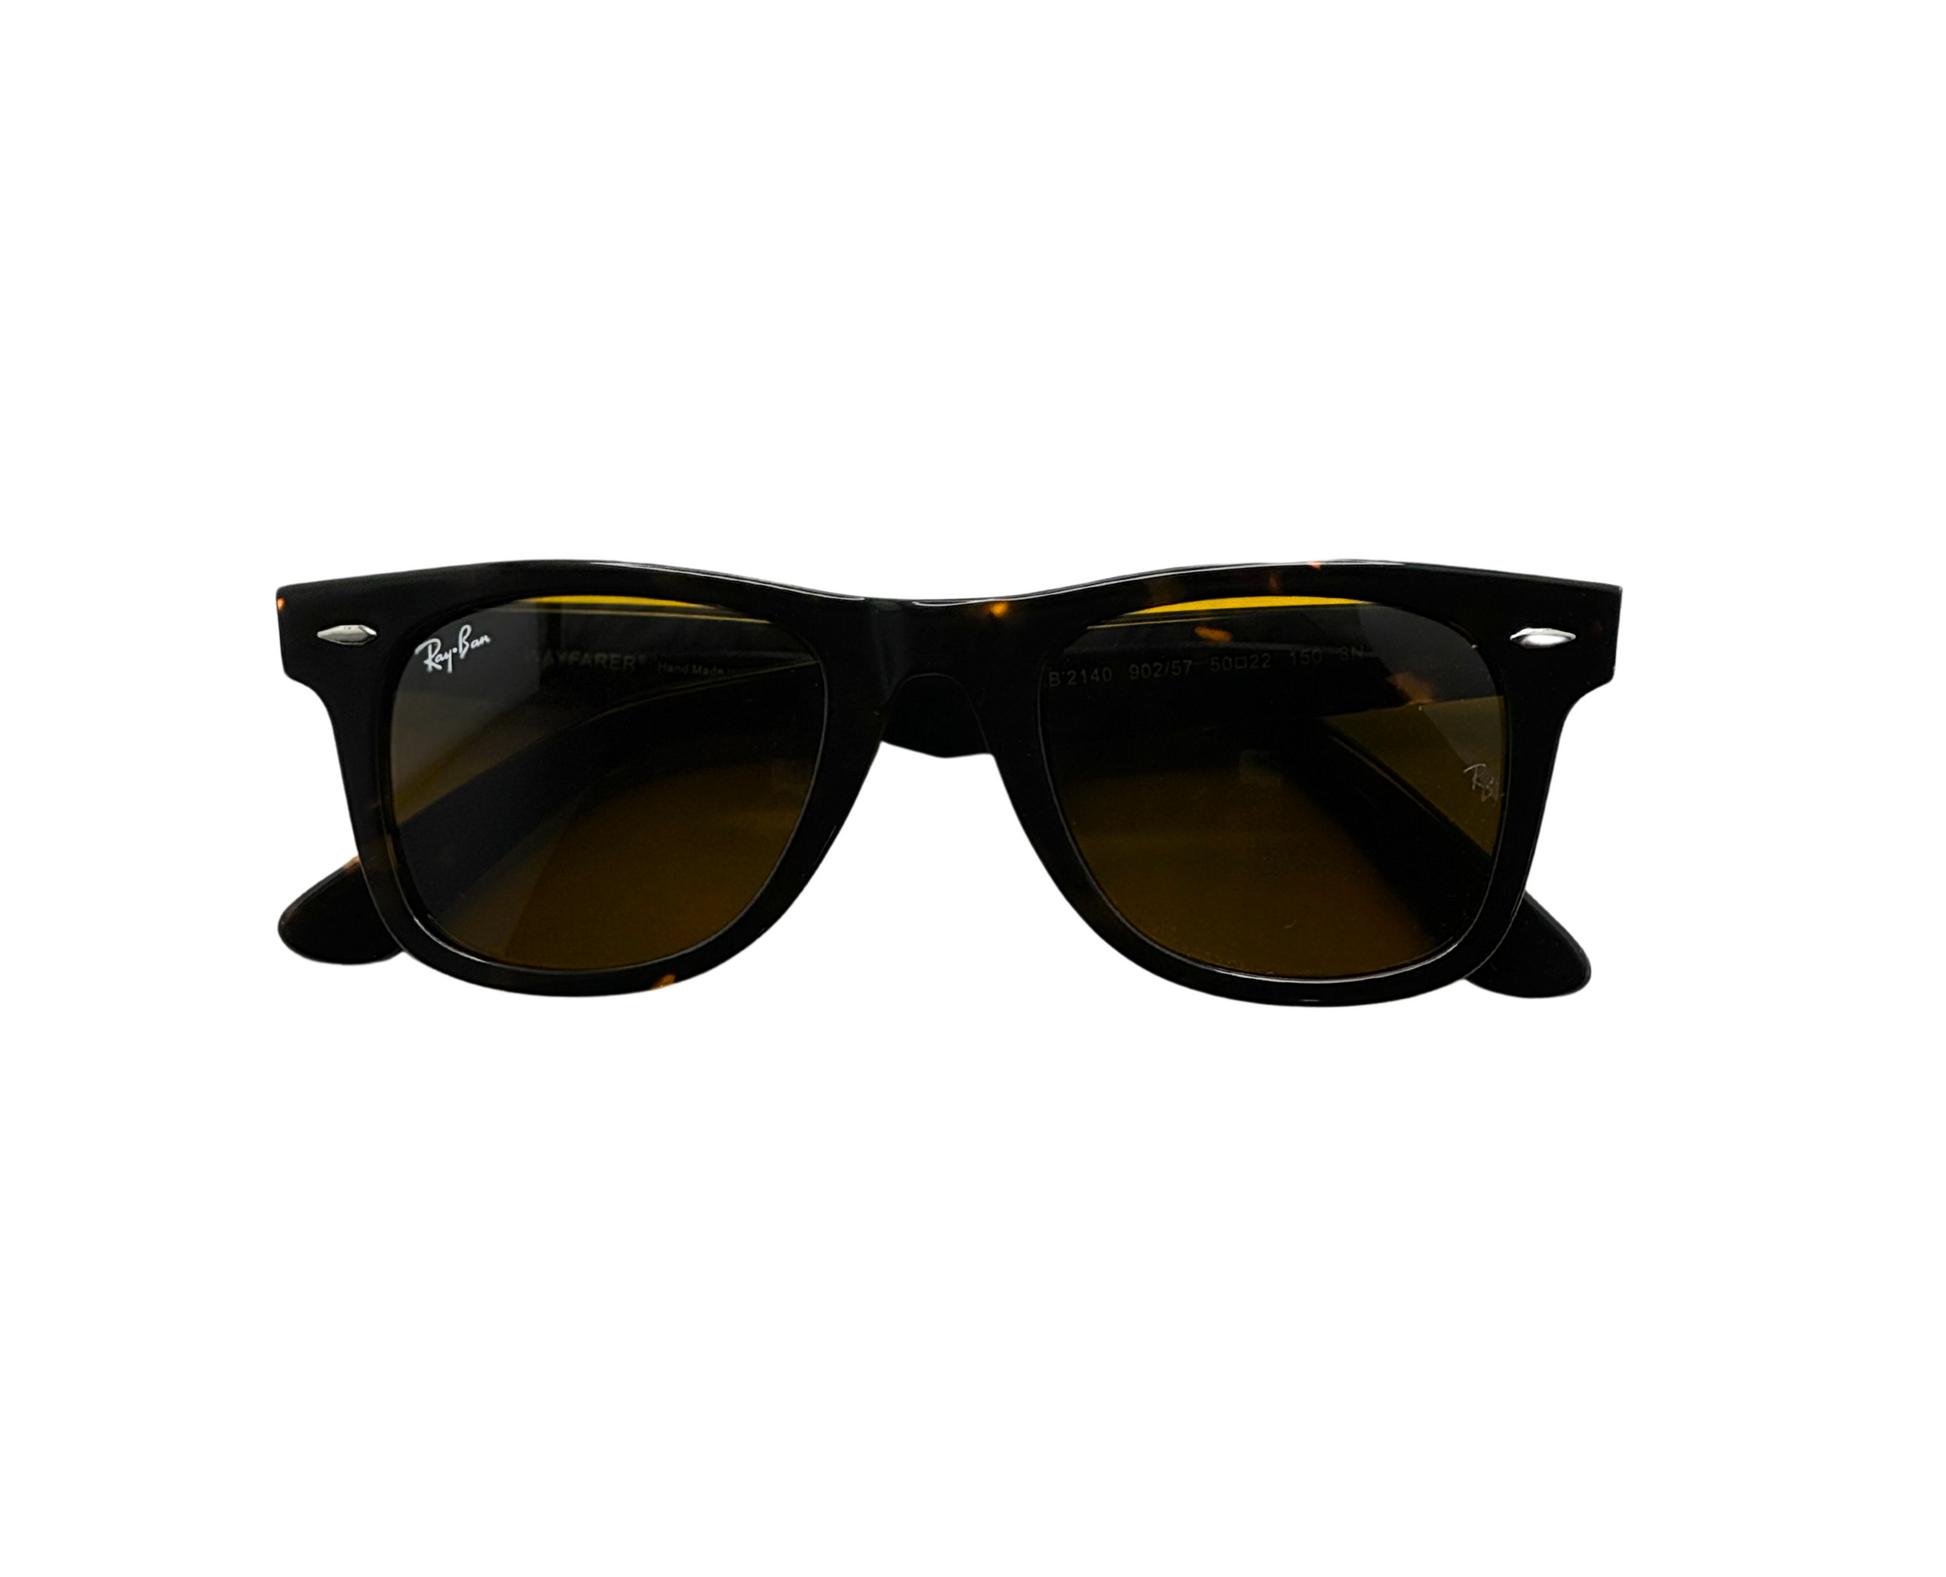 NS Luxury - 2140 - 902 - Wayfarer - Sunglasses